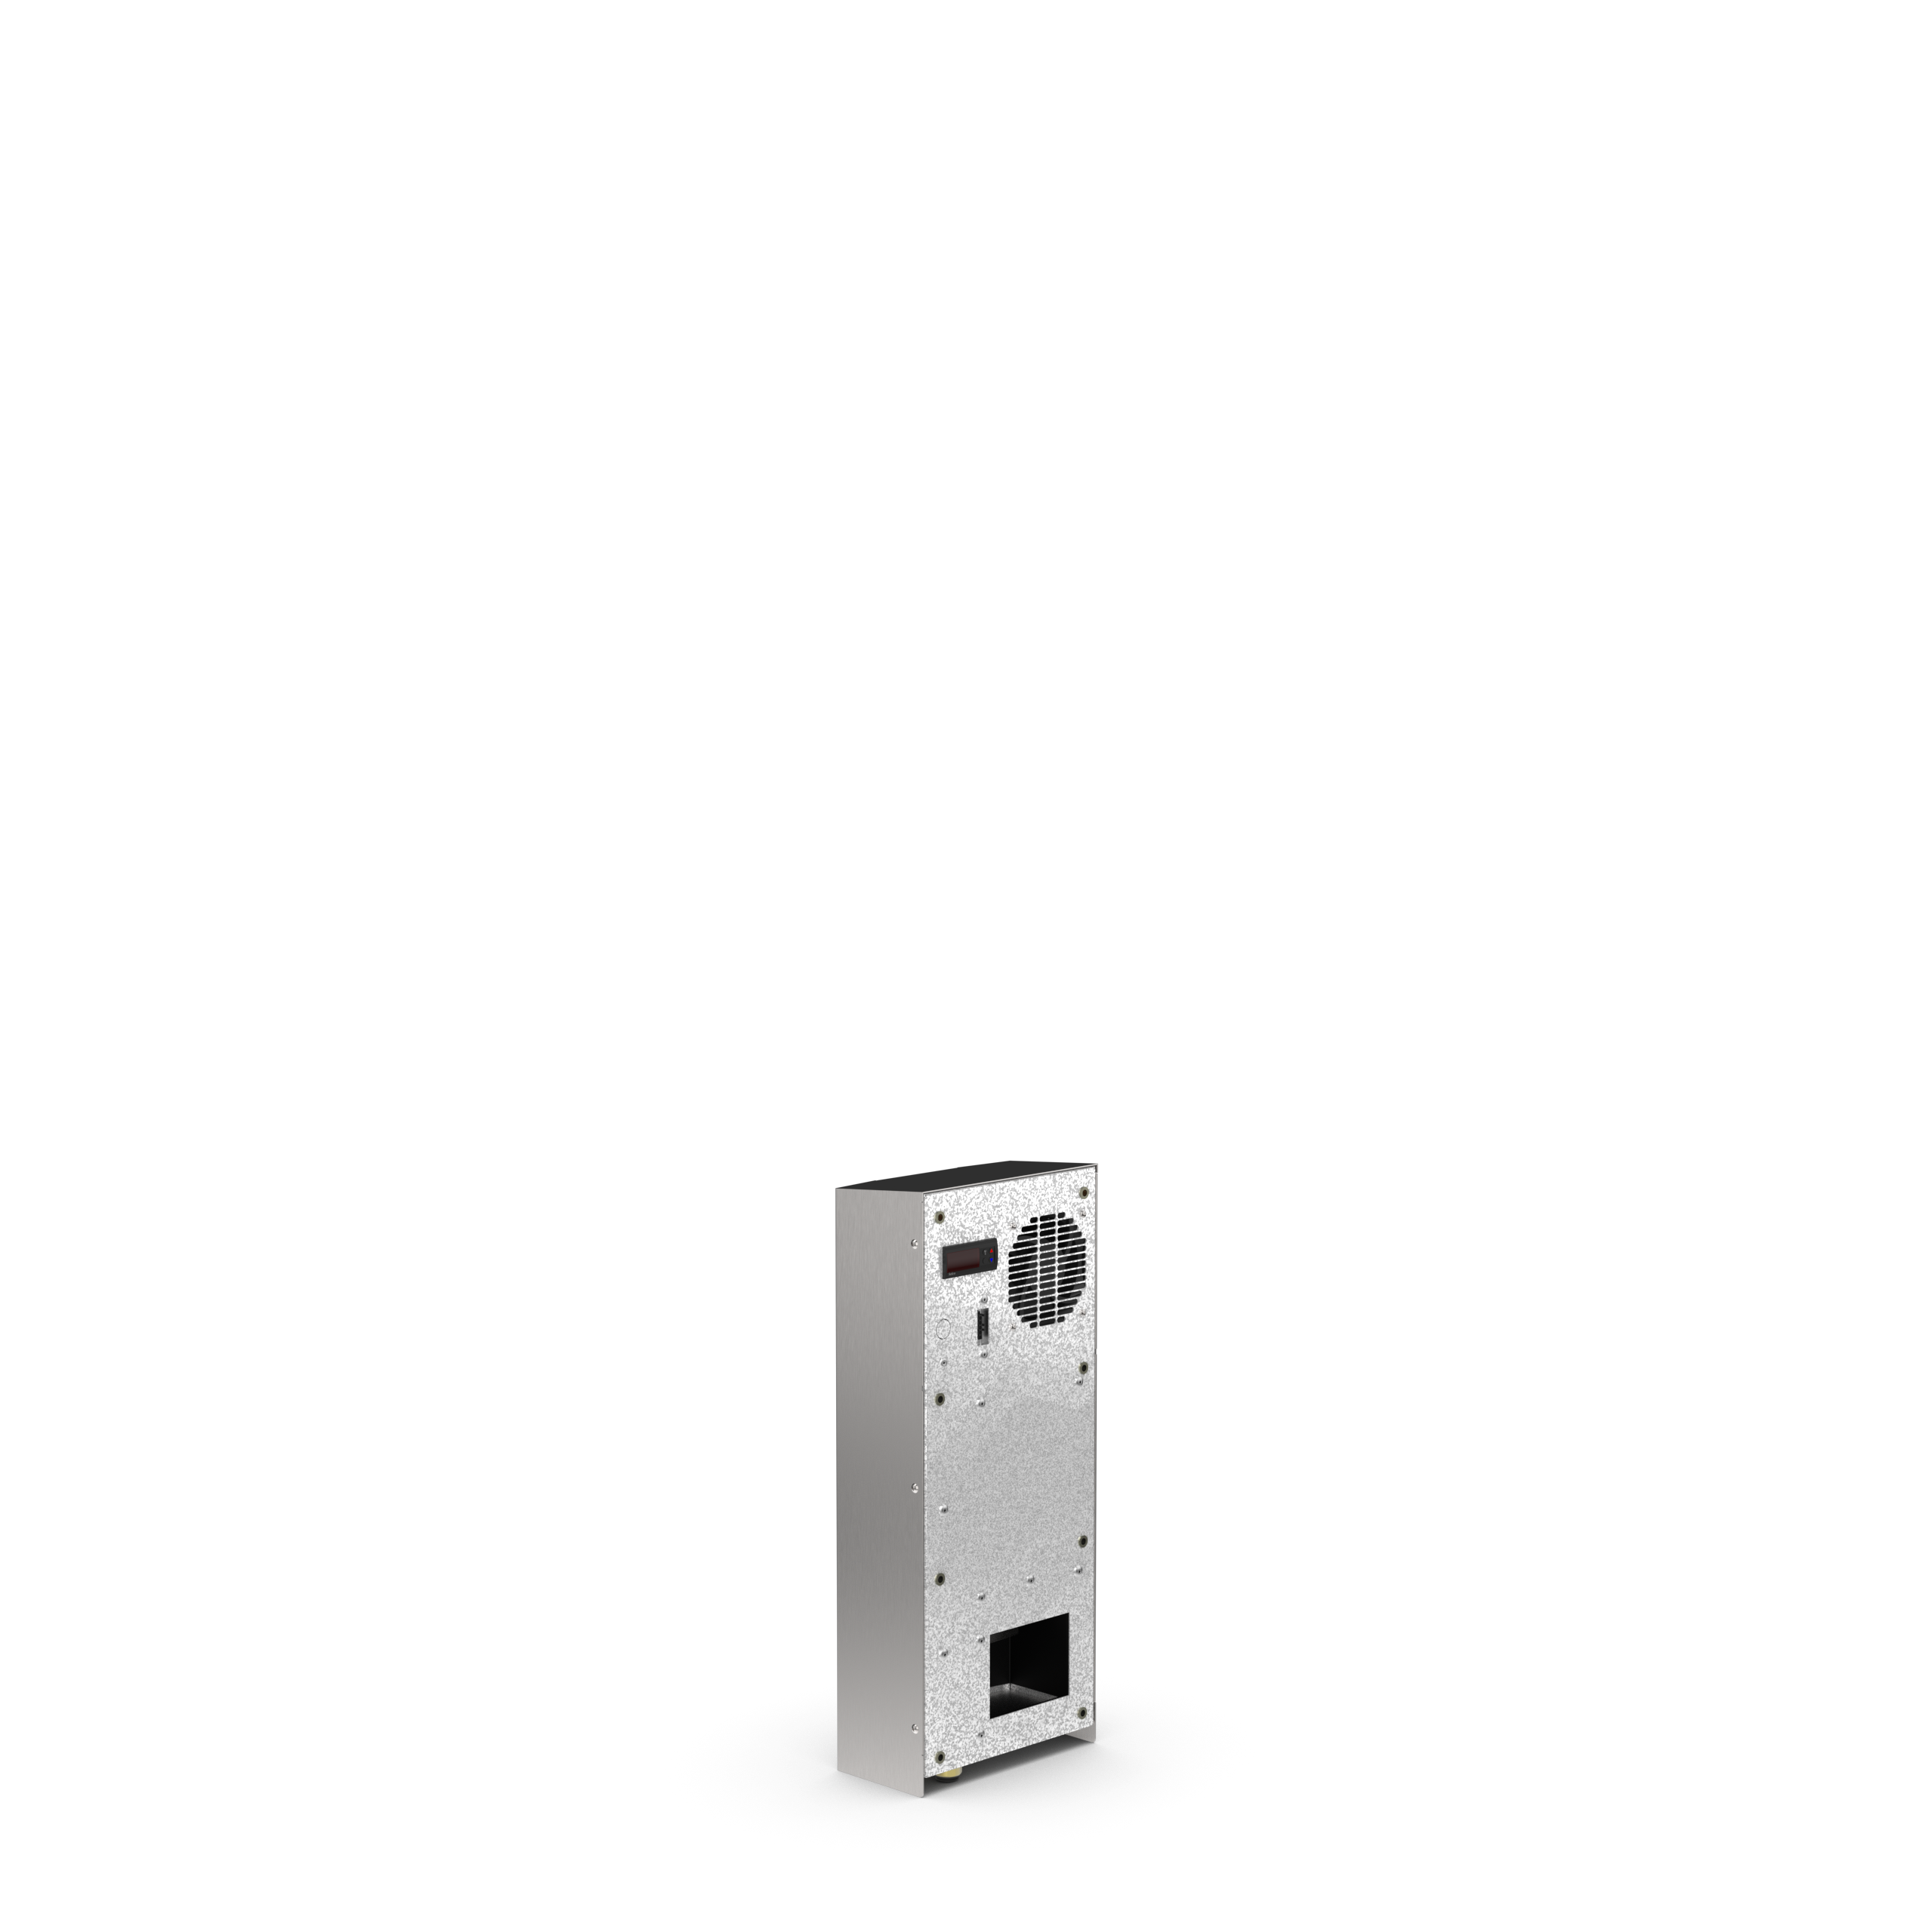 PWS 3062 Air/Water Heat Exchanger